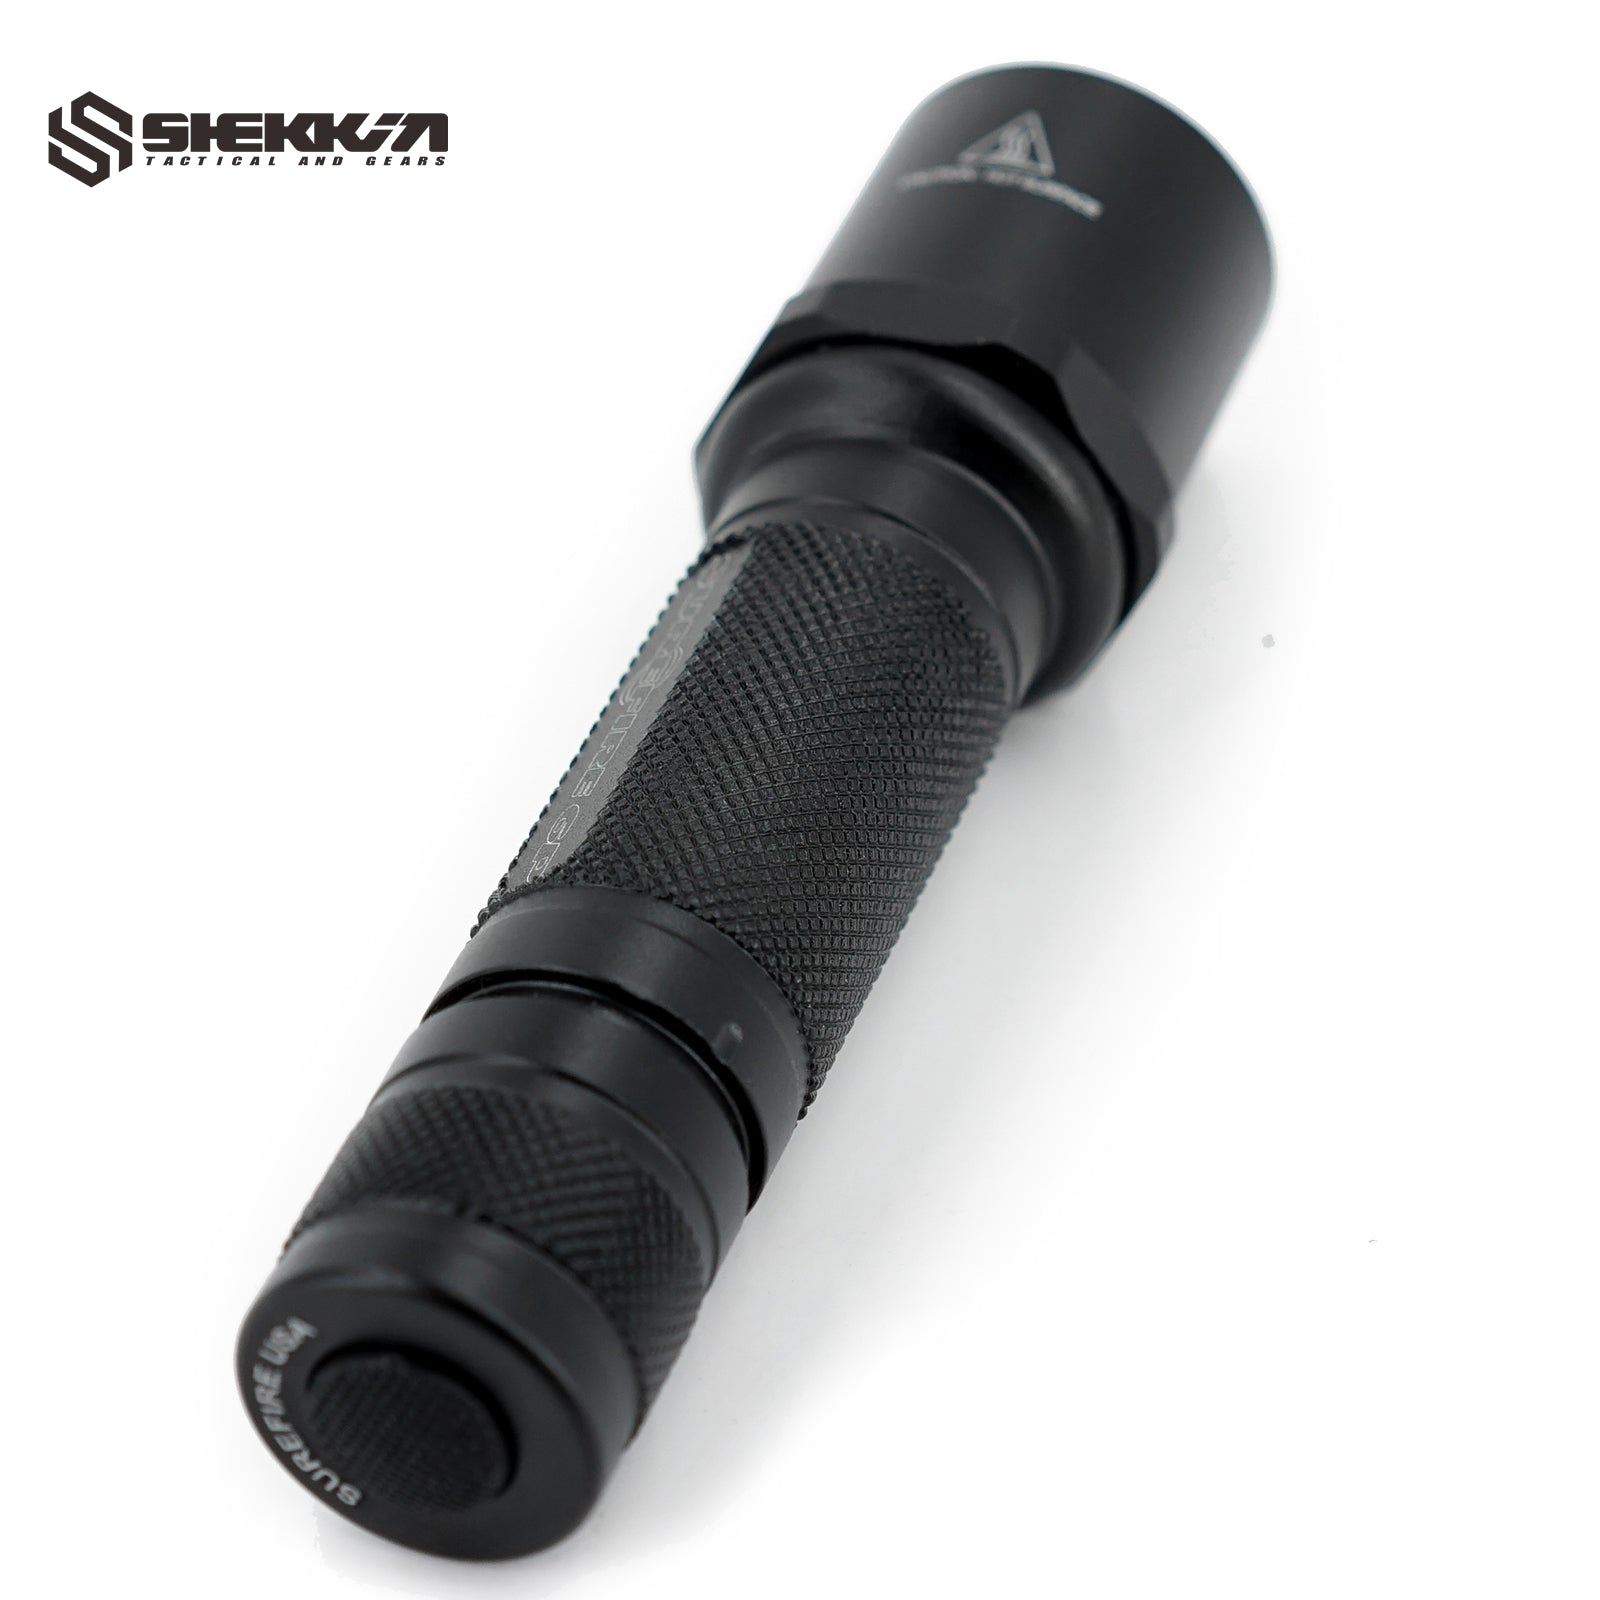 Replica Surefire 6P style flashlight - Shekkin Gears